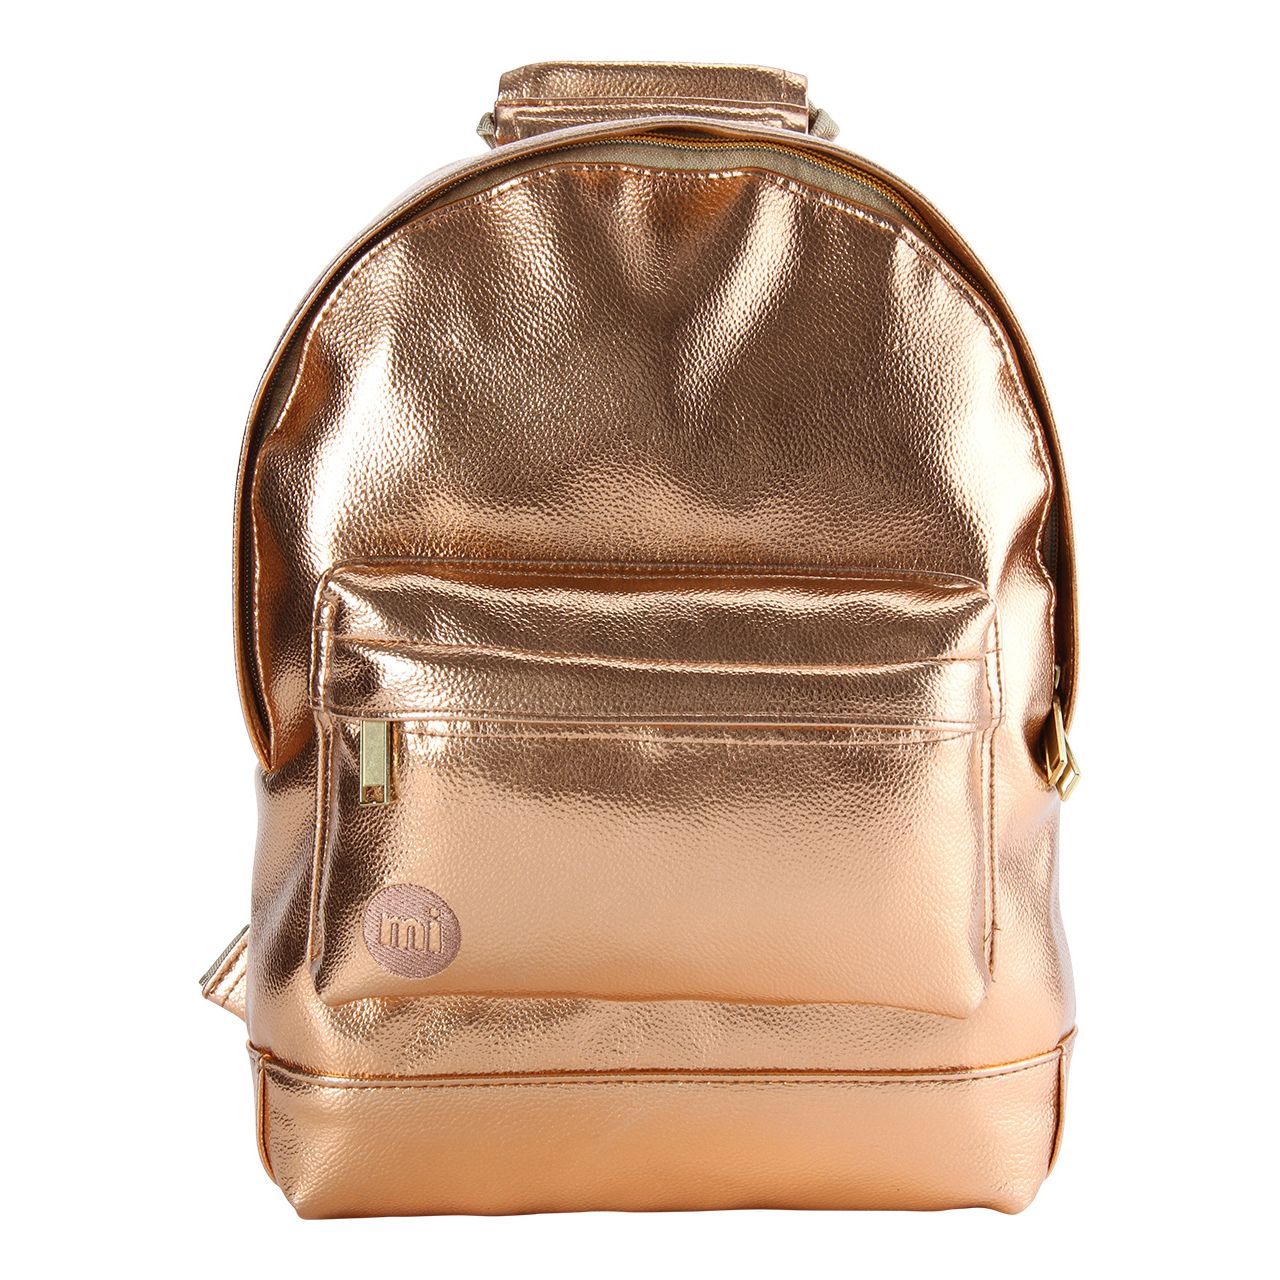 Mi-Pac Gold Metallic Mini Backpack, Rose Gold